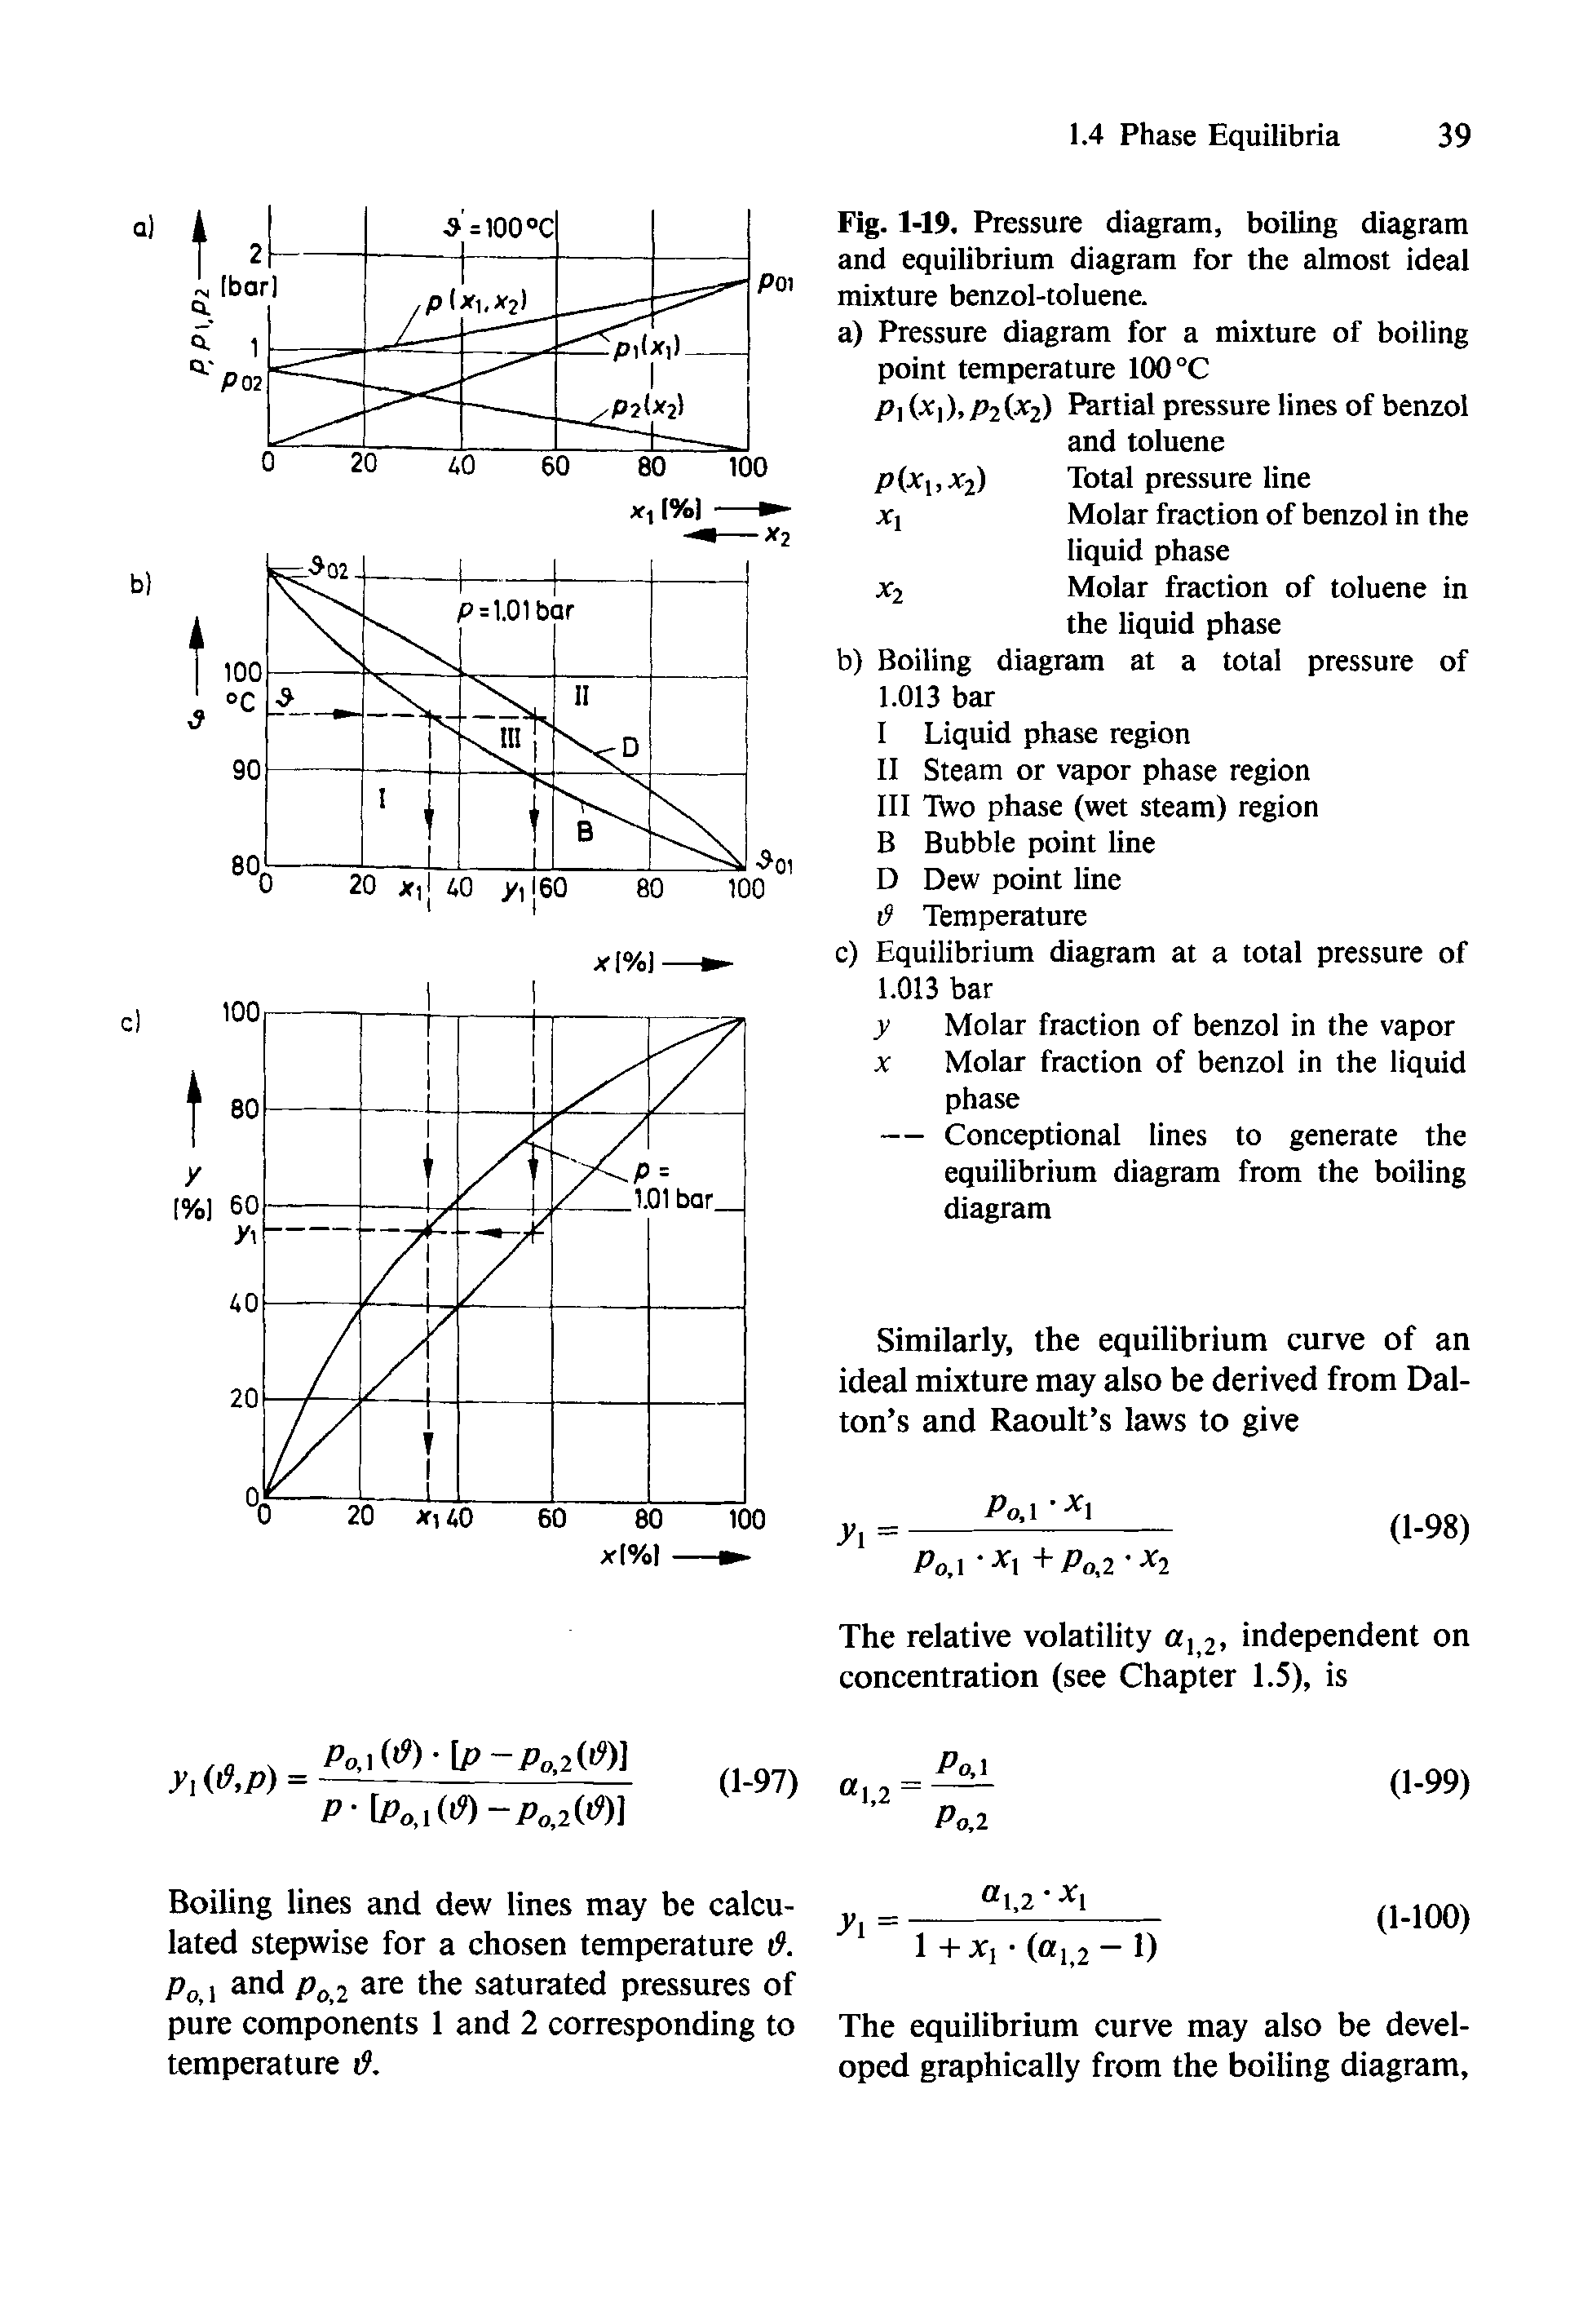 Fig. 1-19. Pressure diagram, boiling diagram and equilibrium diagram for the almost ideal mixture benzol-toluene.